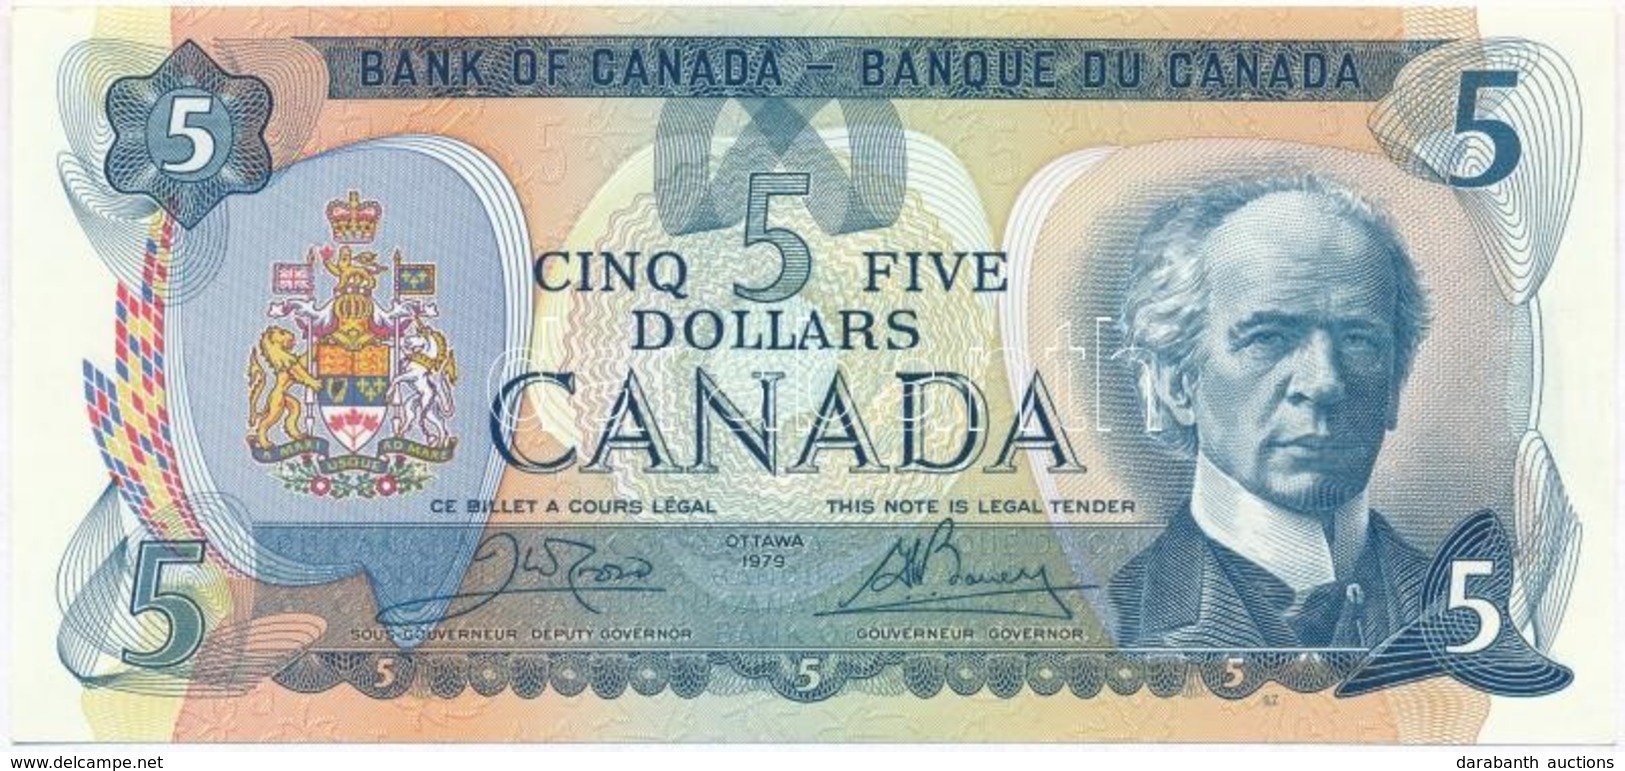 Kanada 1979. 5$ T:I
Canada 1979. 5 Dollars C:UNC
Krause KM#92 - Unclassified